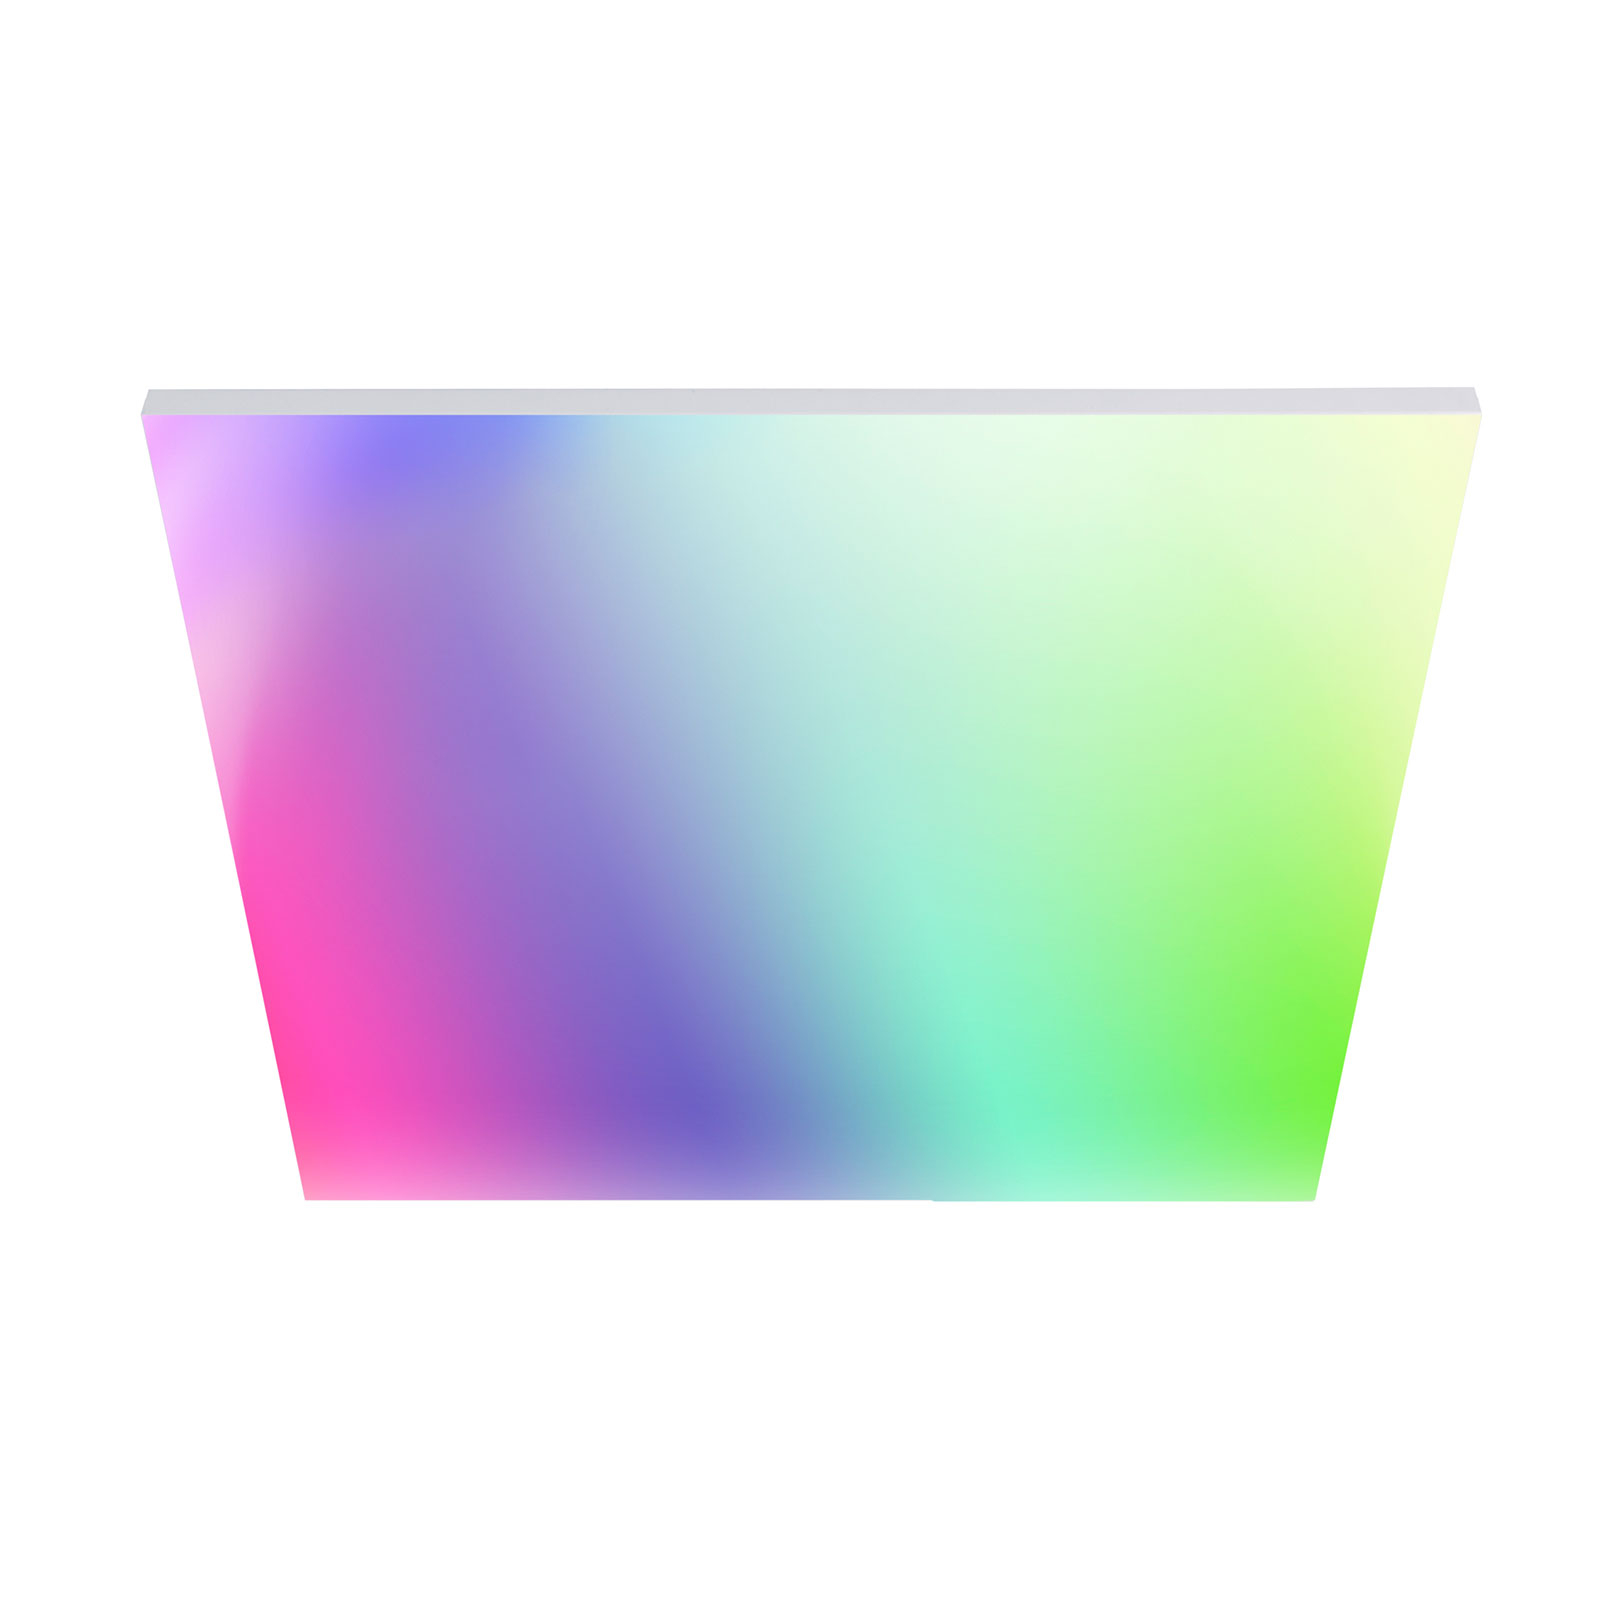 Müller Licht tint-LED-paneeli Aris 60 x 60 cm RGBW